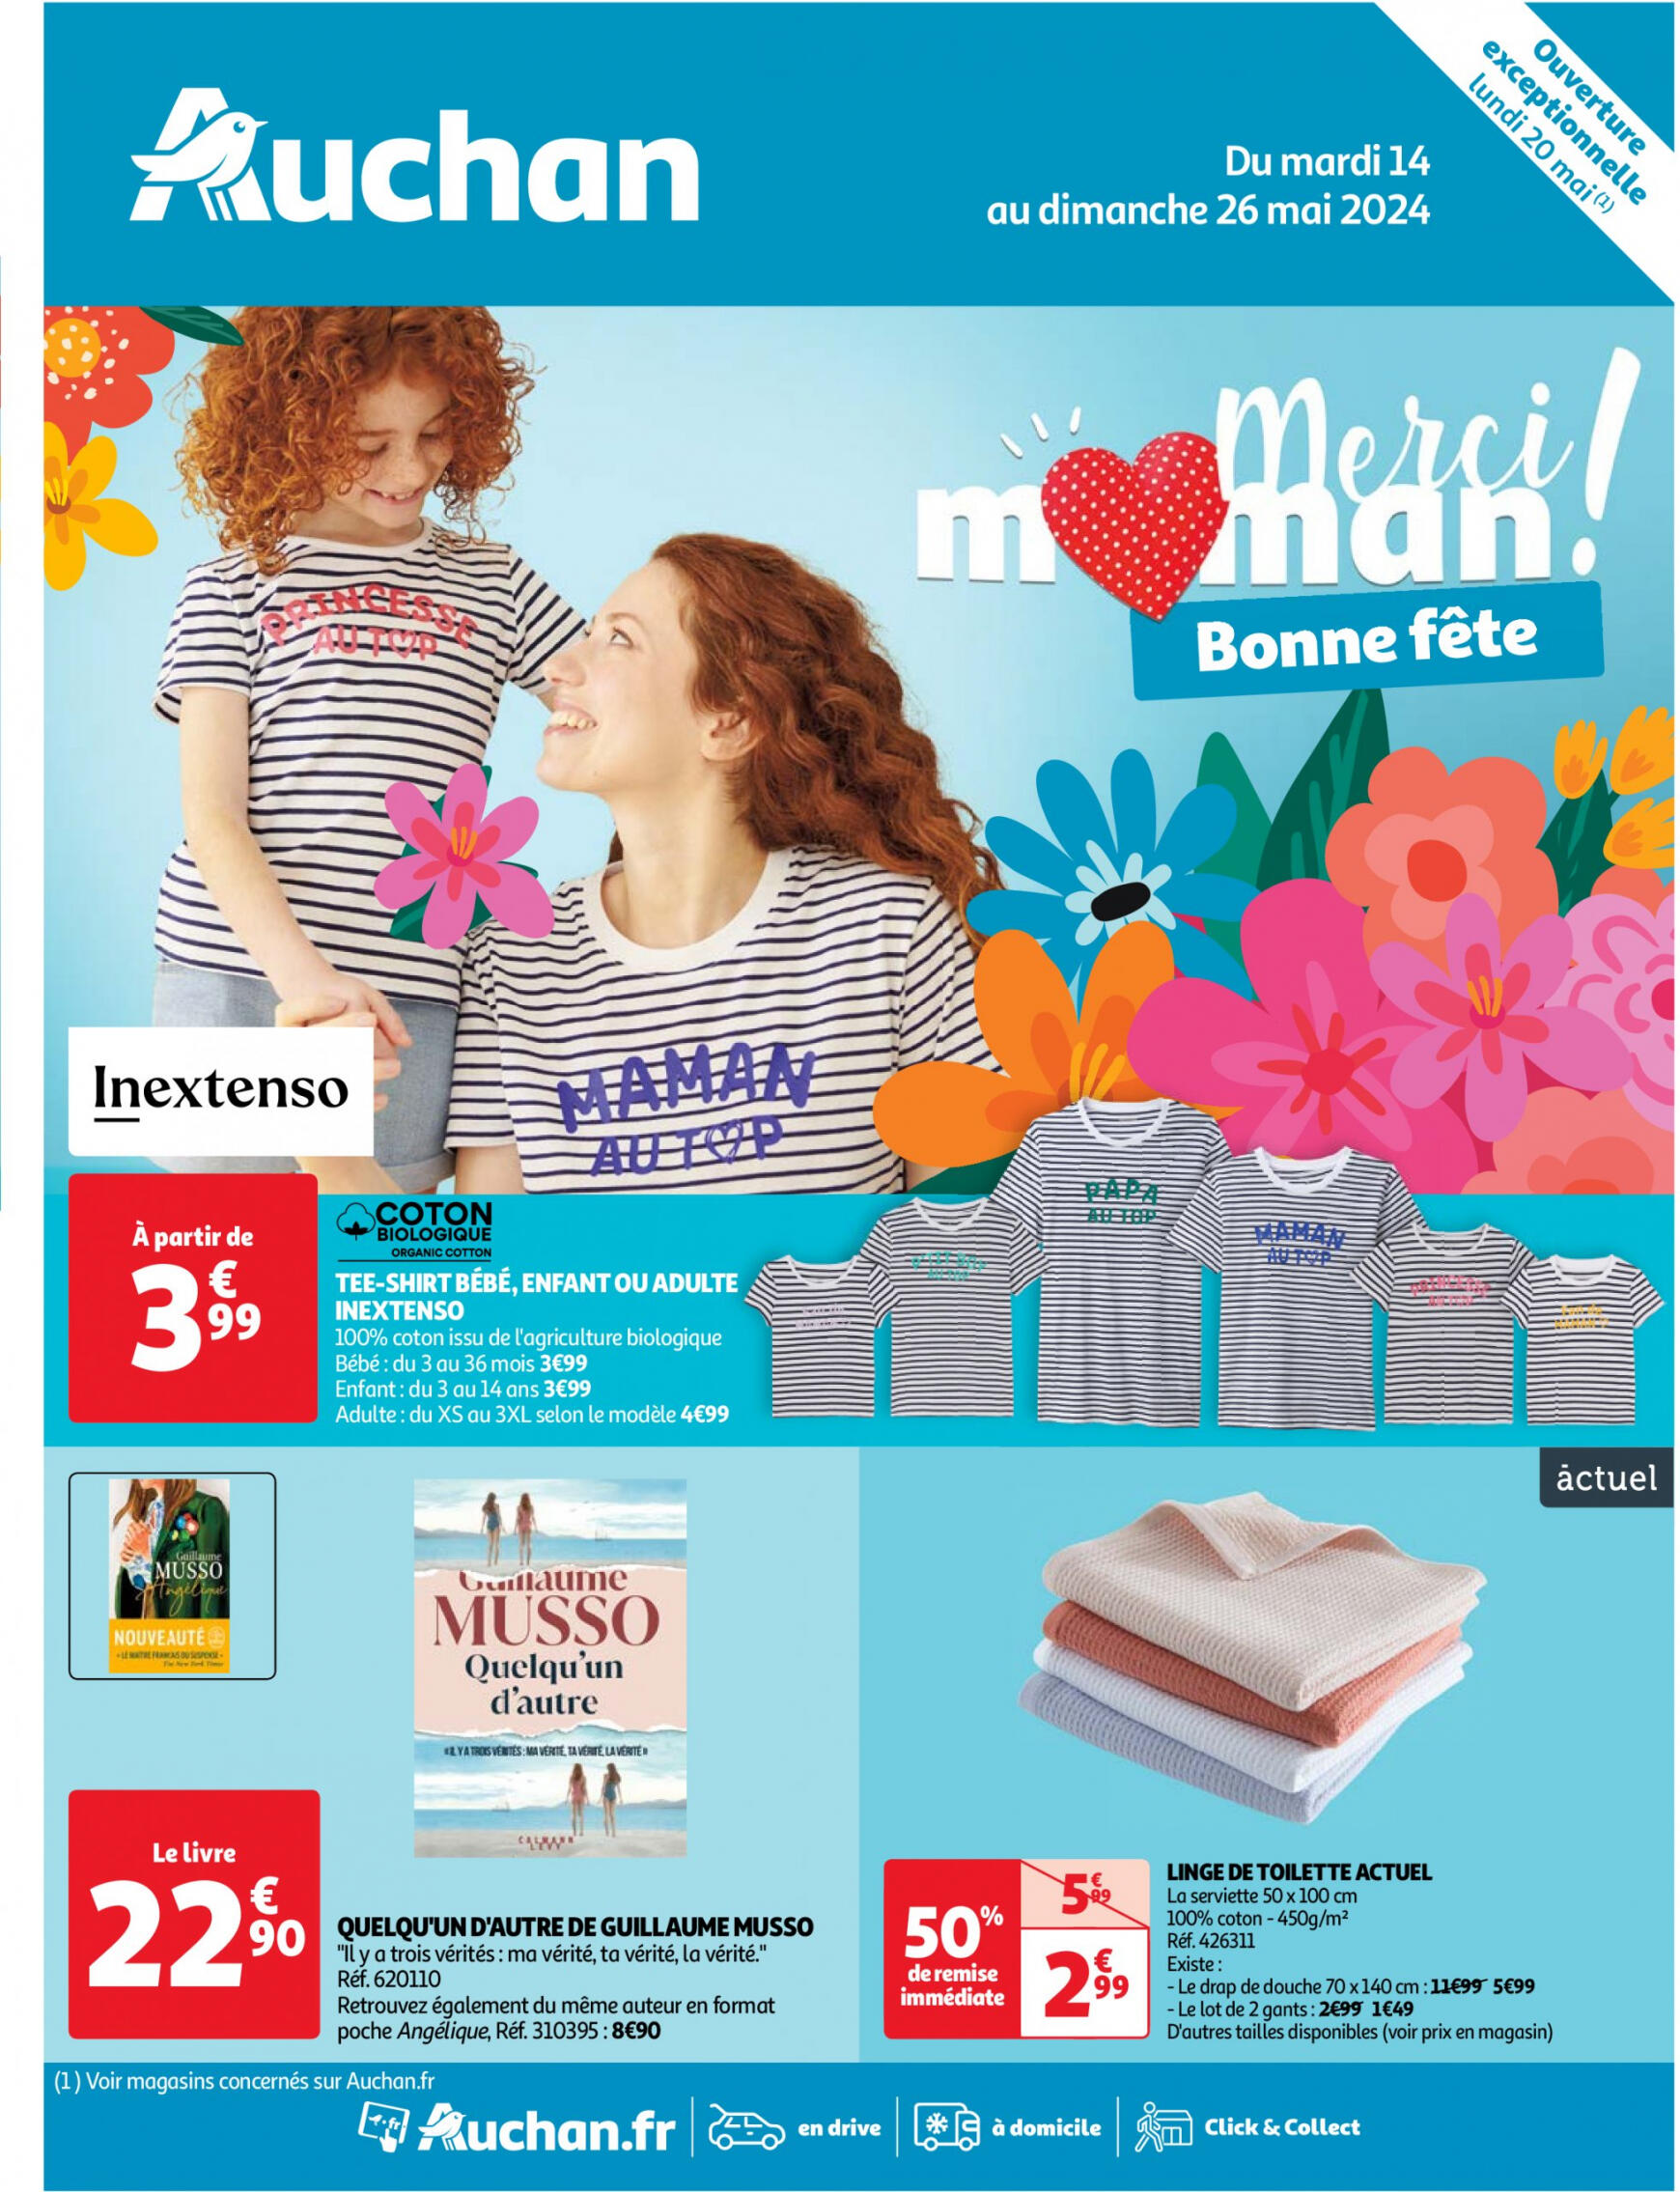 auchan - Prospectus Auchan - Merci maman actuel 14.05. - 26.05.